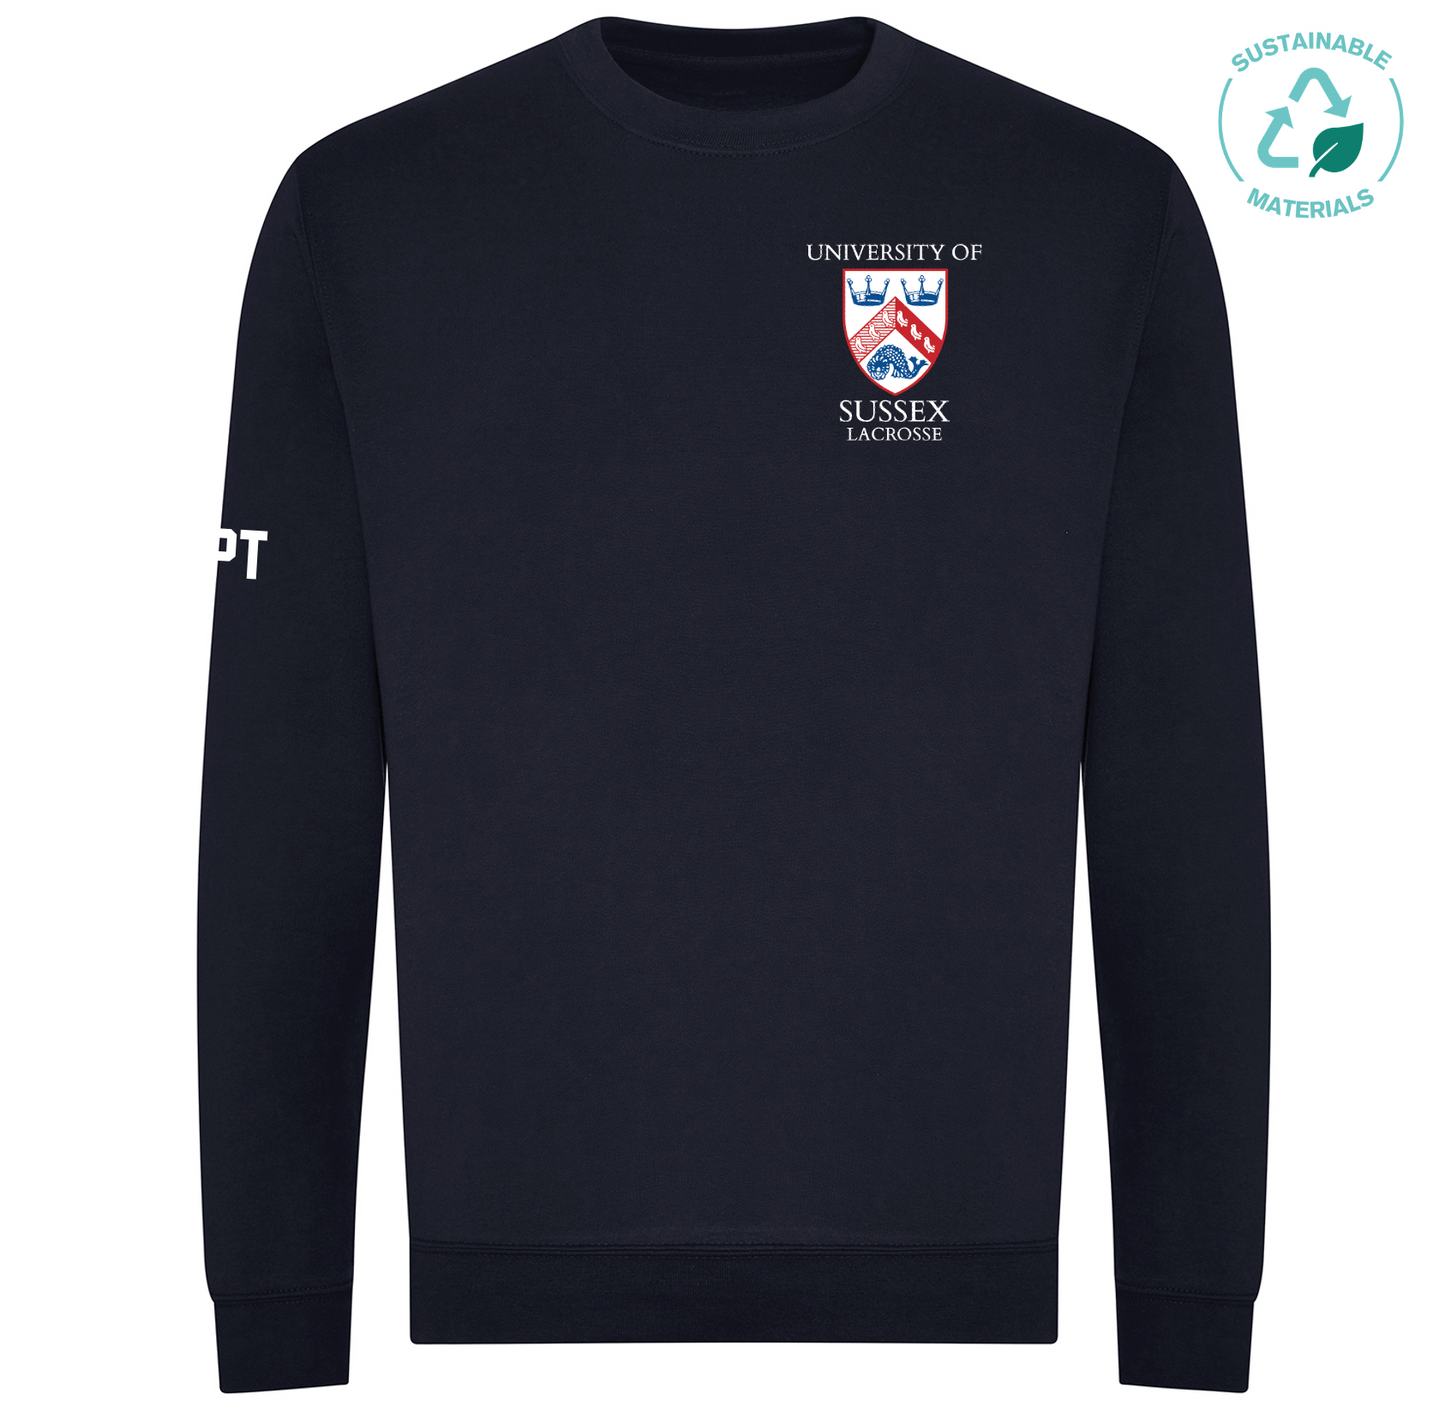 University of Sussex Lacrosse Organic Sweatshirt